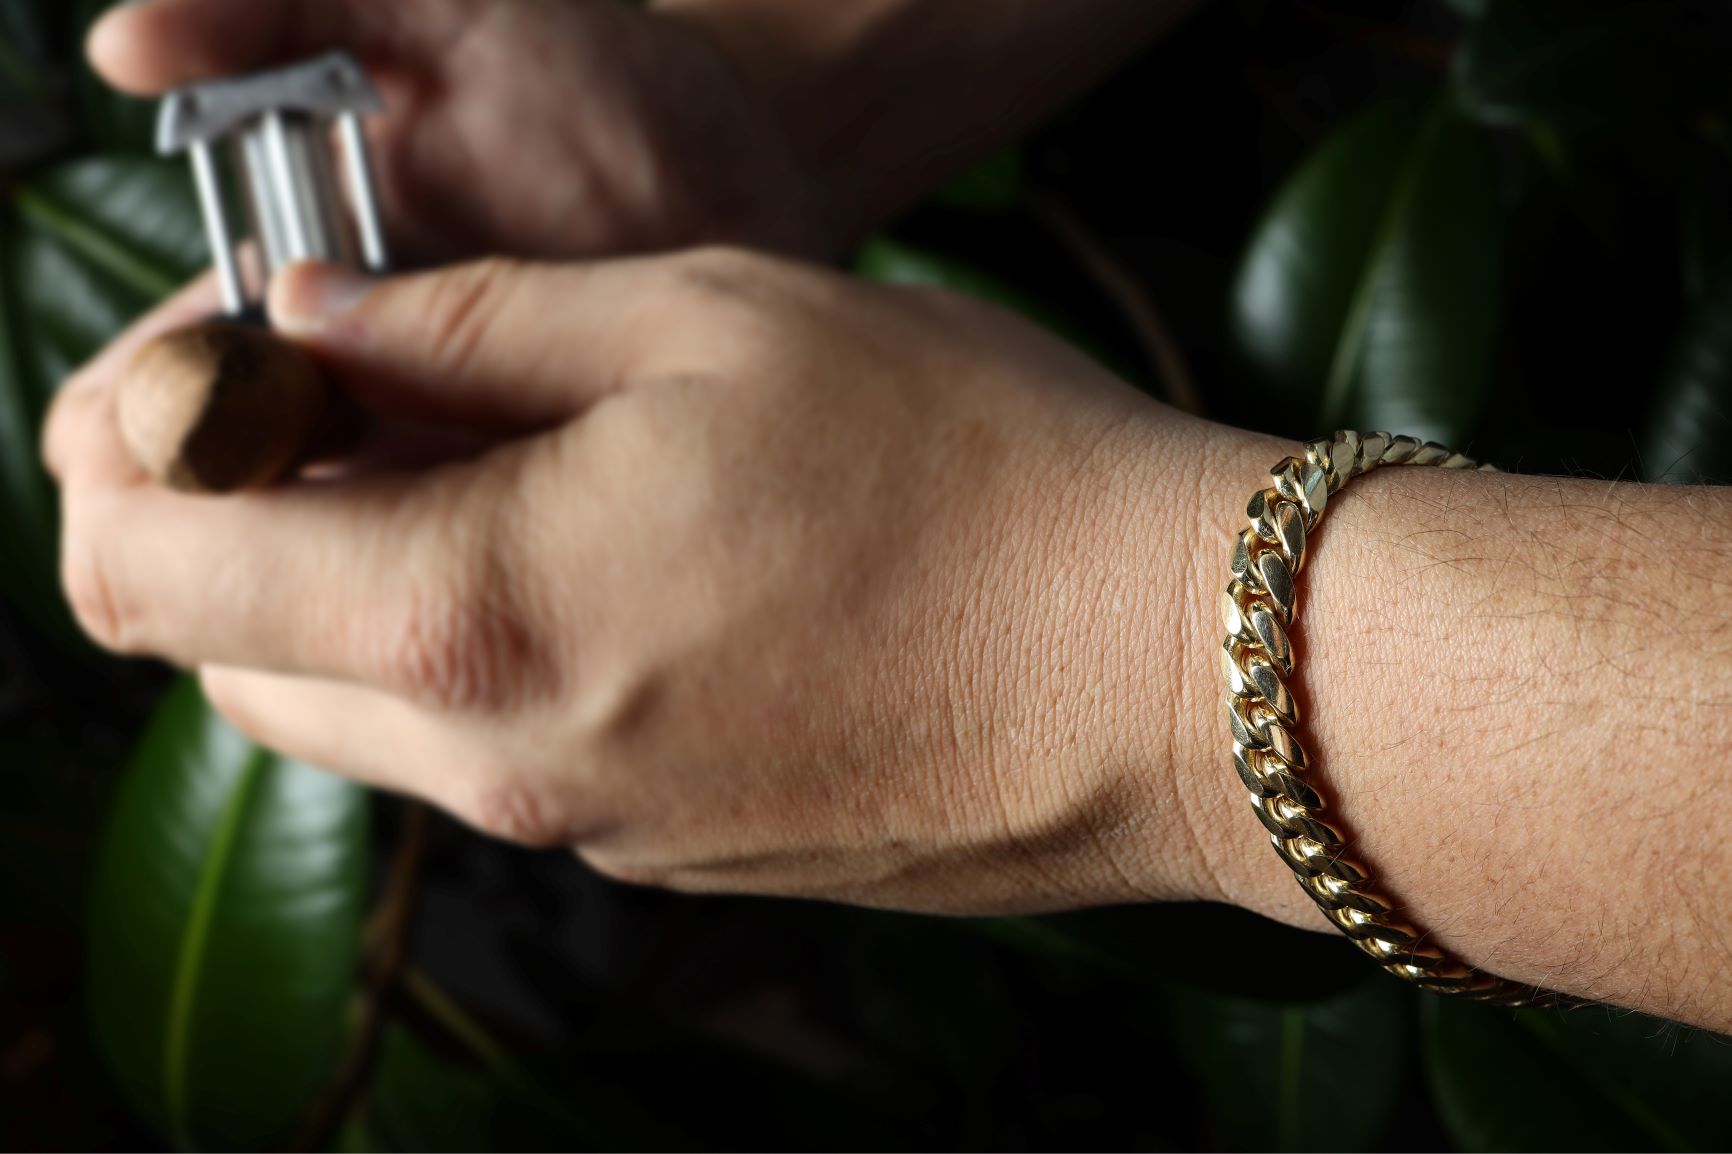 Miami Cuban Gold Link Bracelet